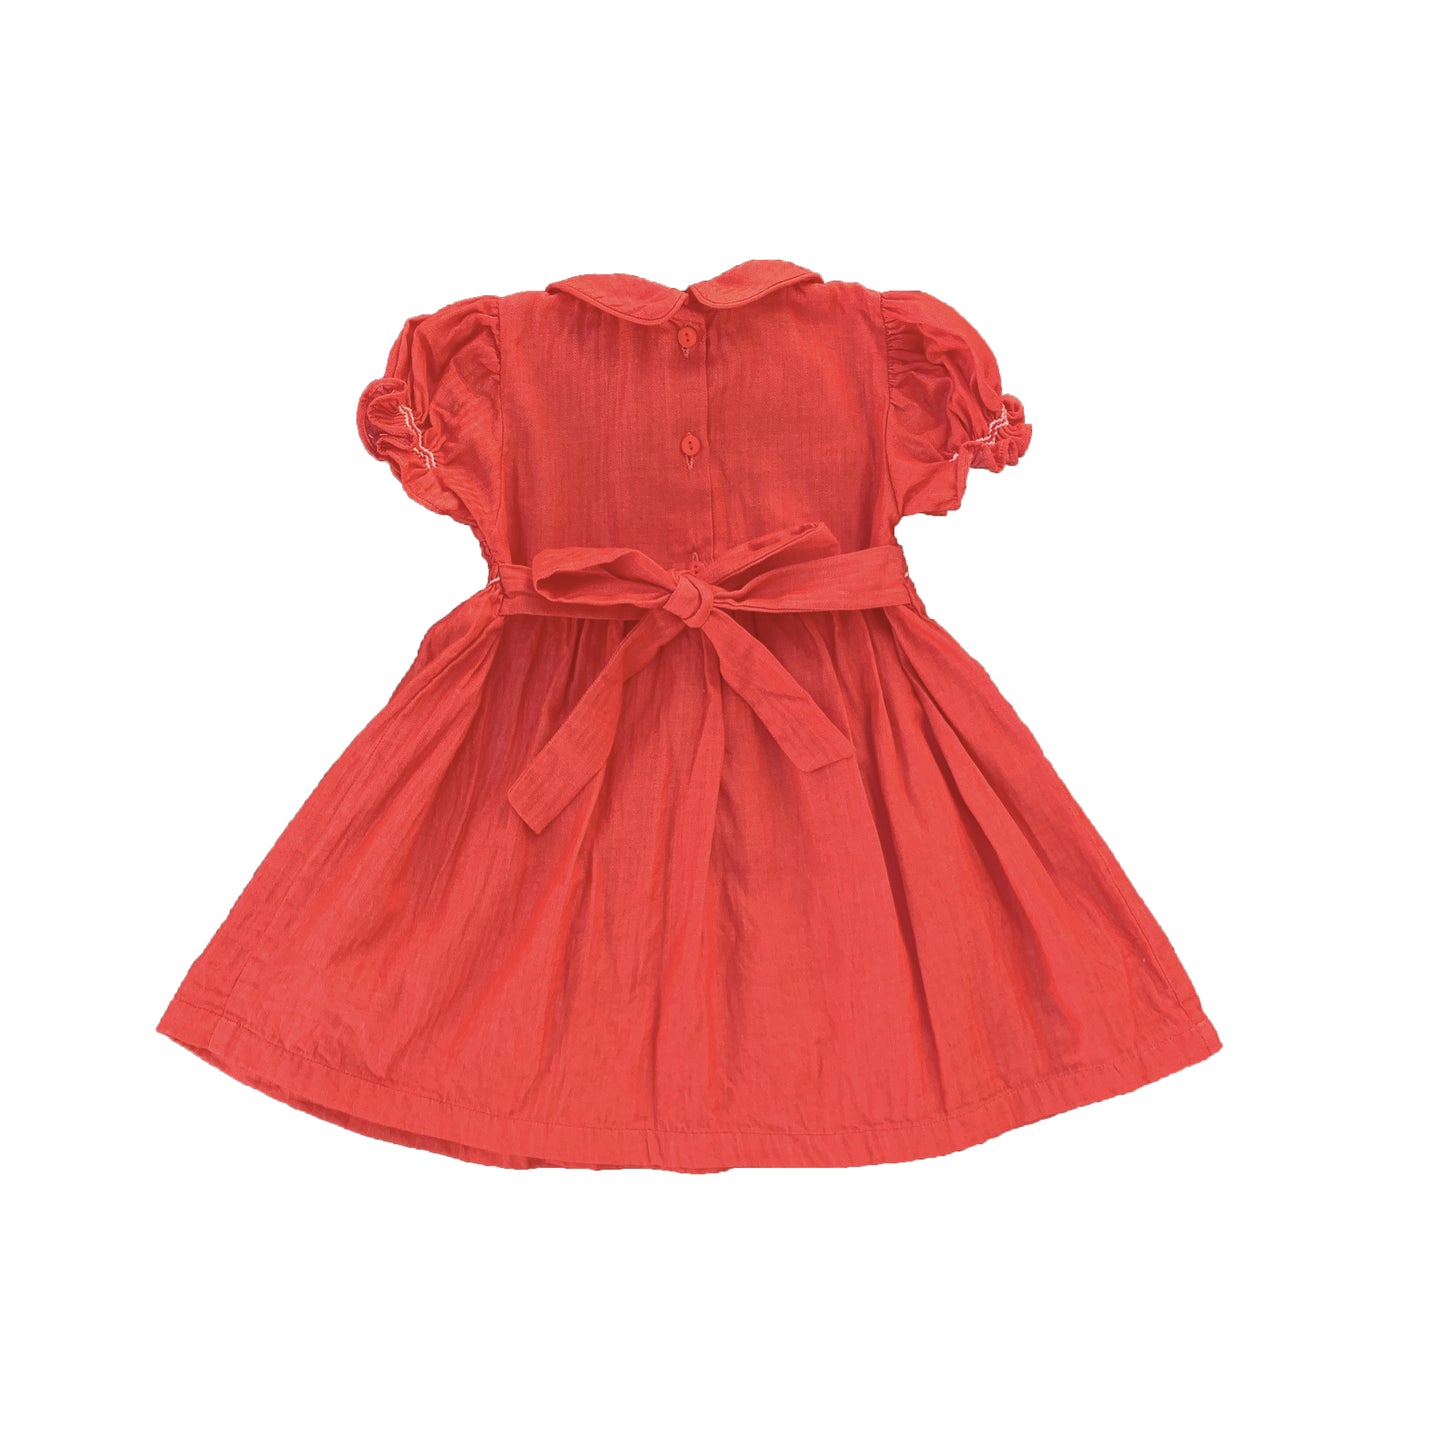 Lava Red Smocked Dress